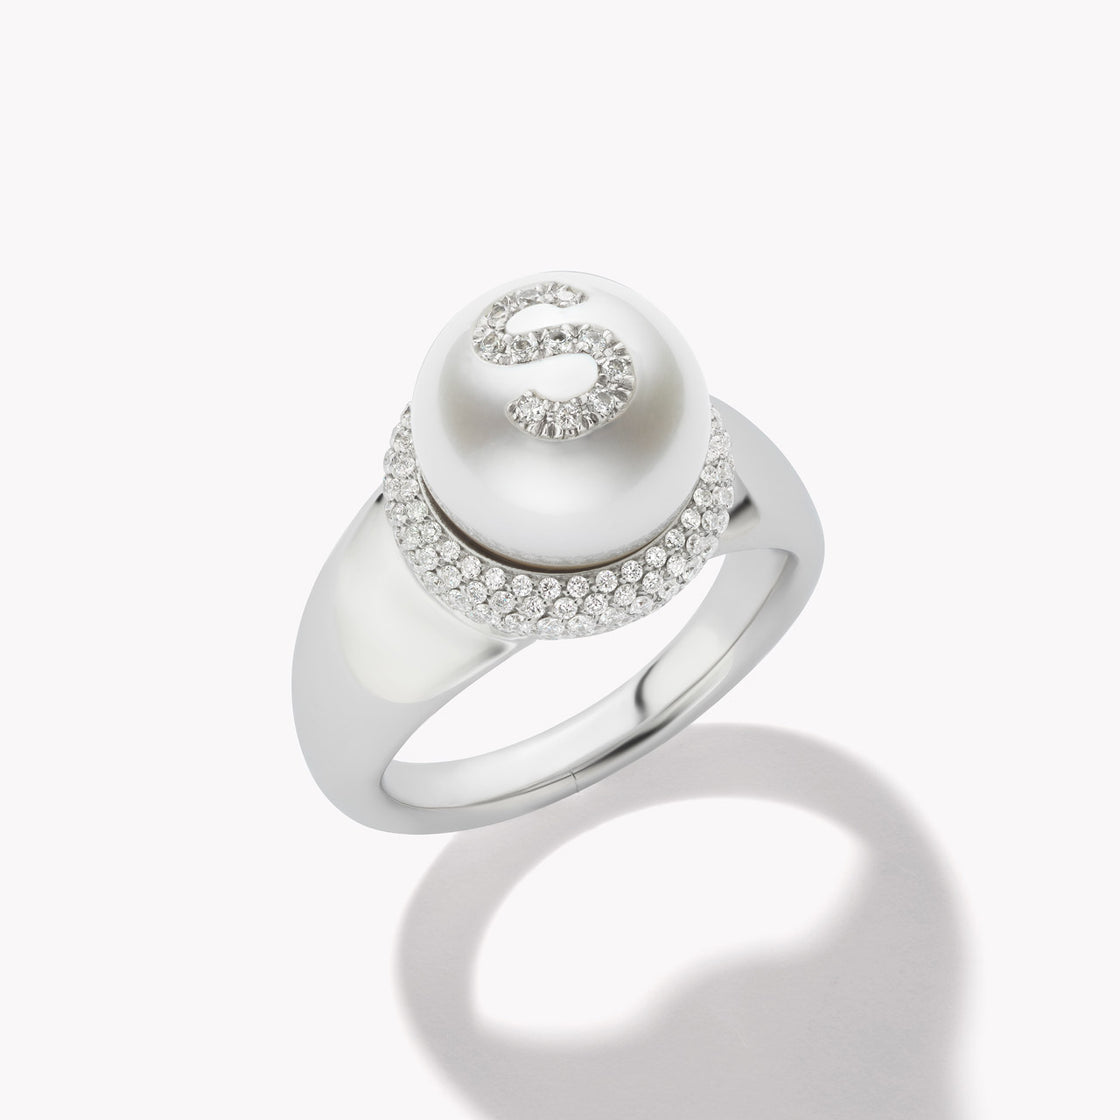 Pearl ID Ring